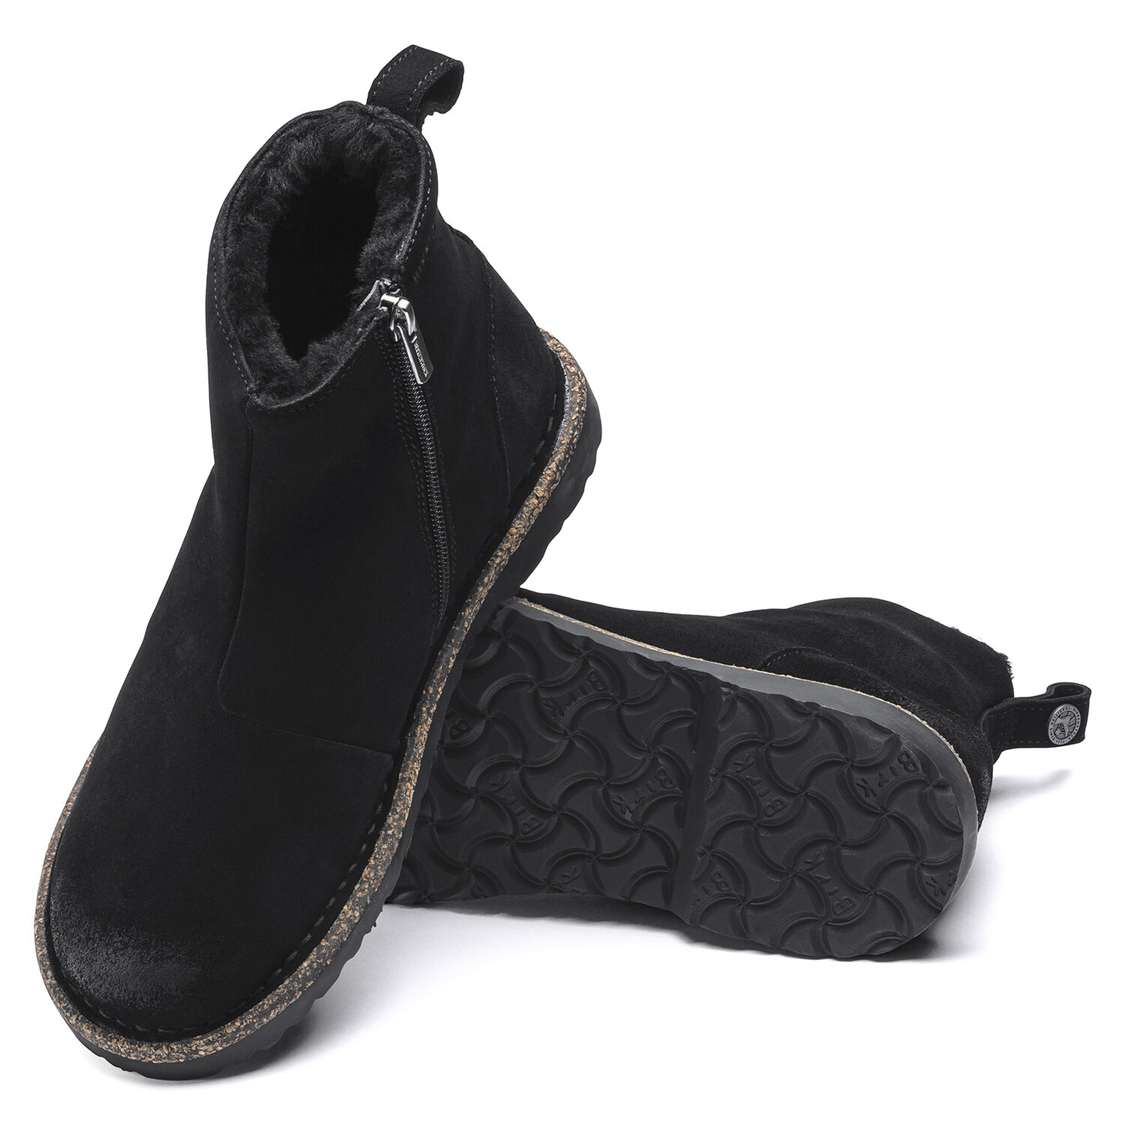 Black Birkenstock Melrose Shearling Suede Leather Women's Boots | qcZ4NZTd3IL